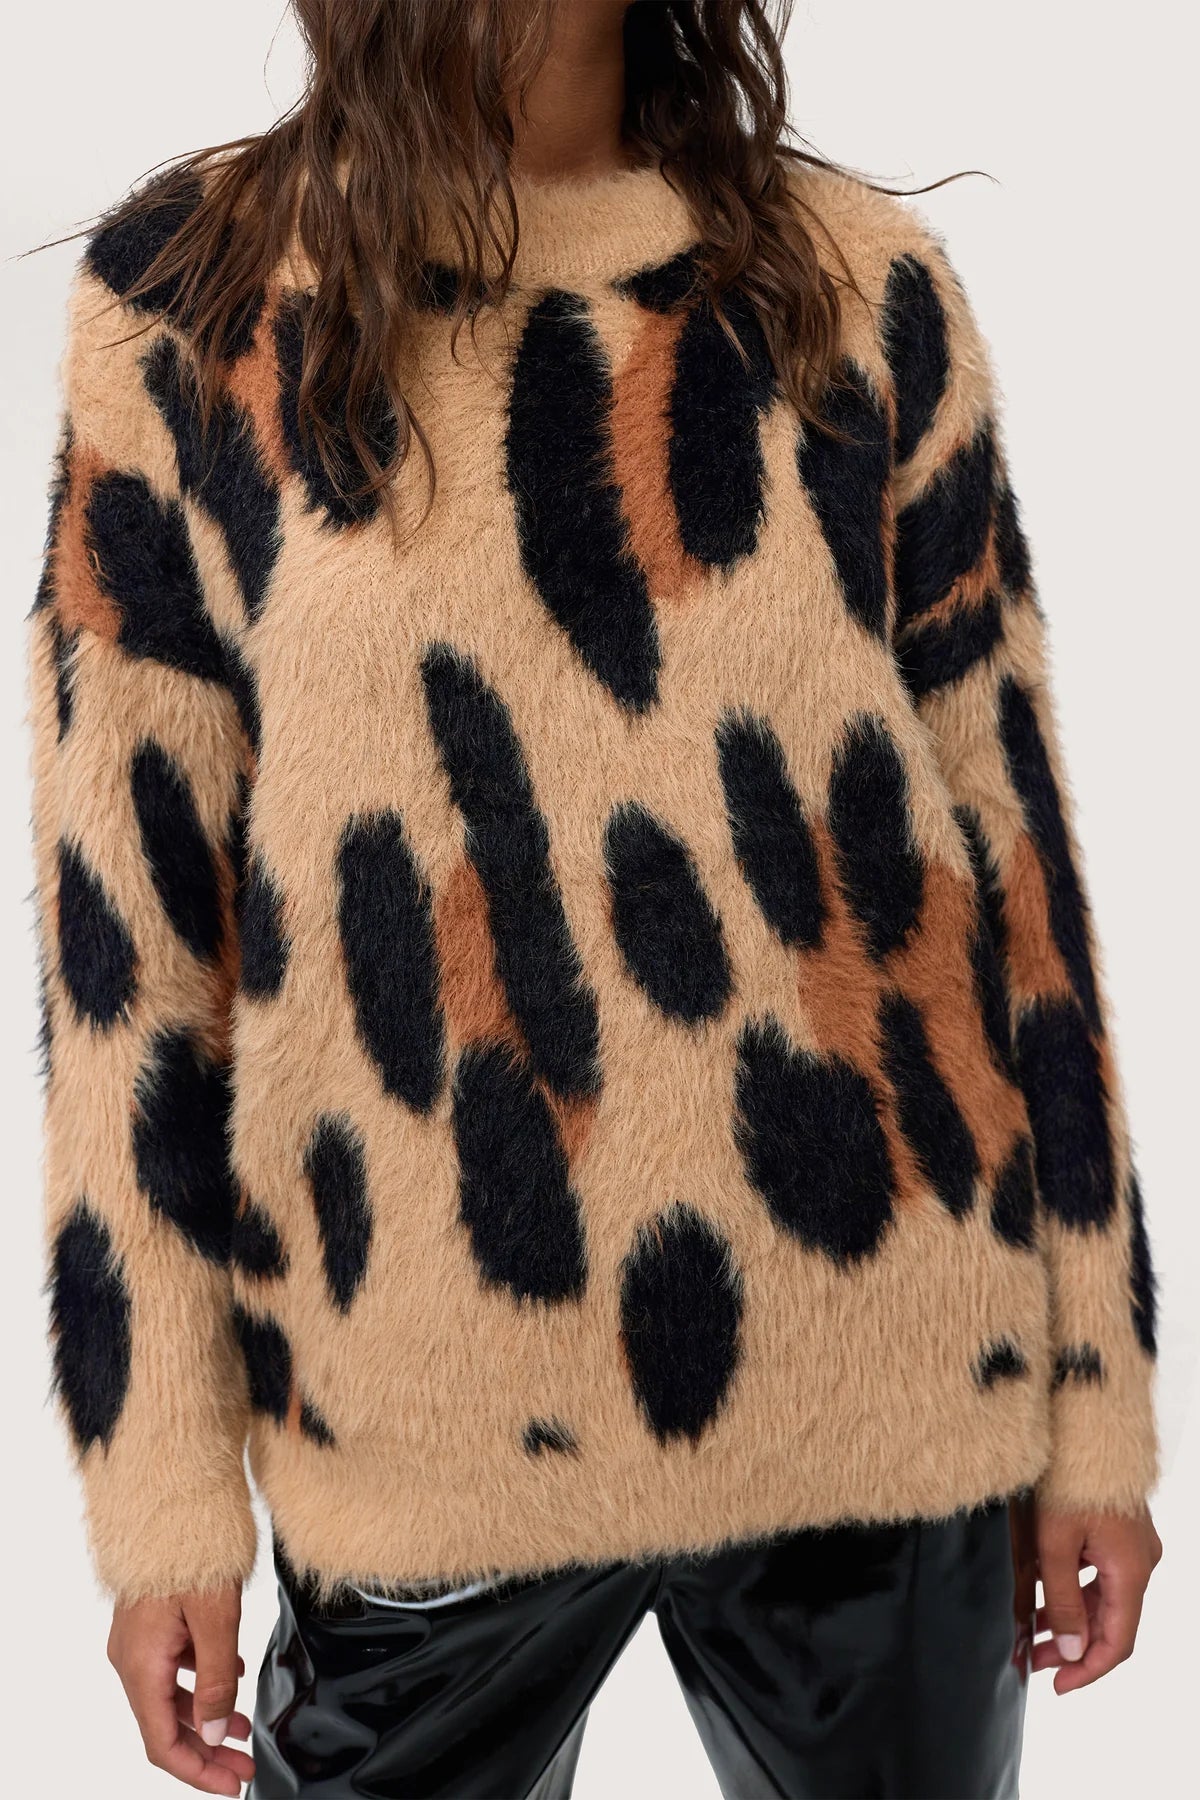 Dozy Sweater - Cheetah Scramble